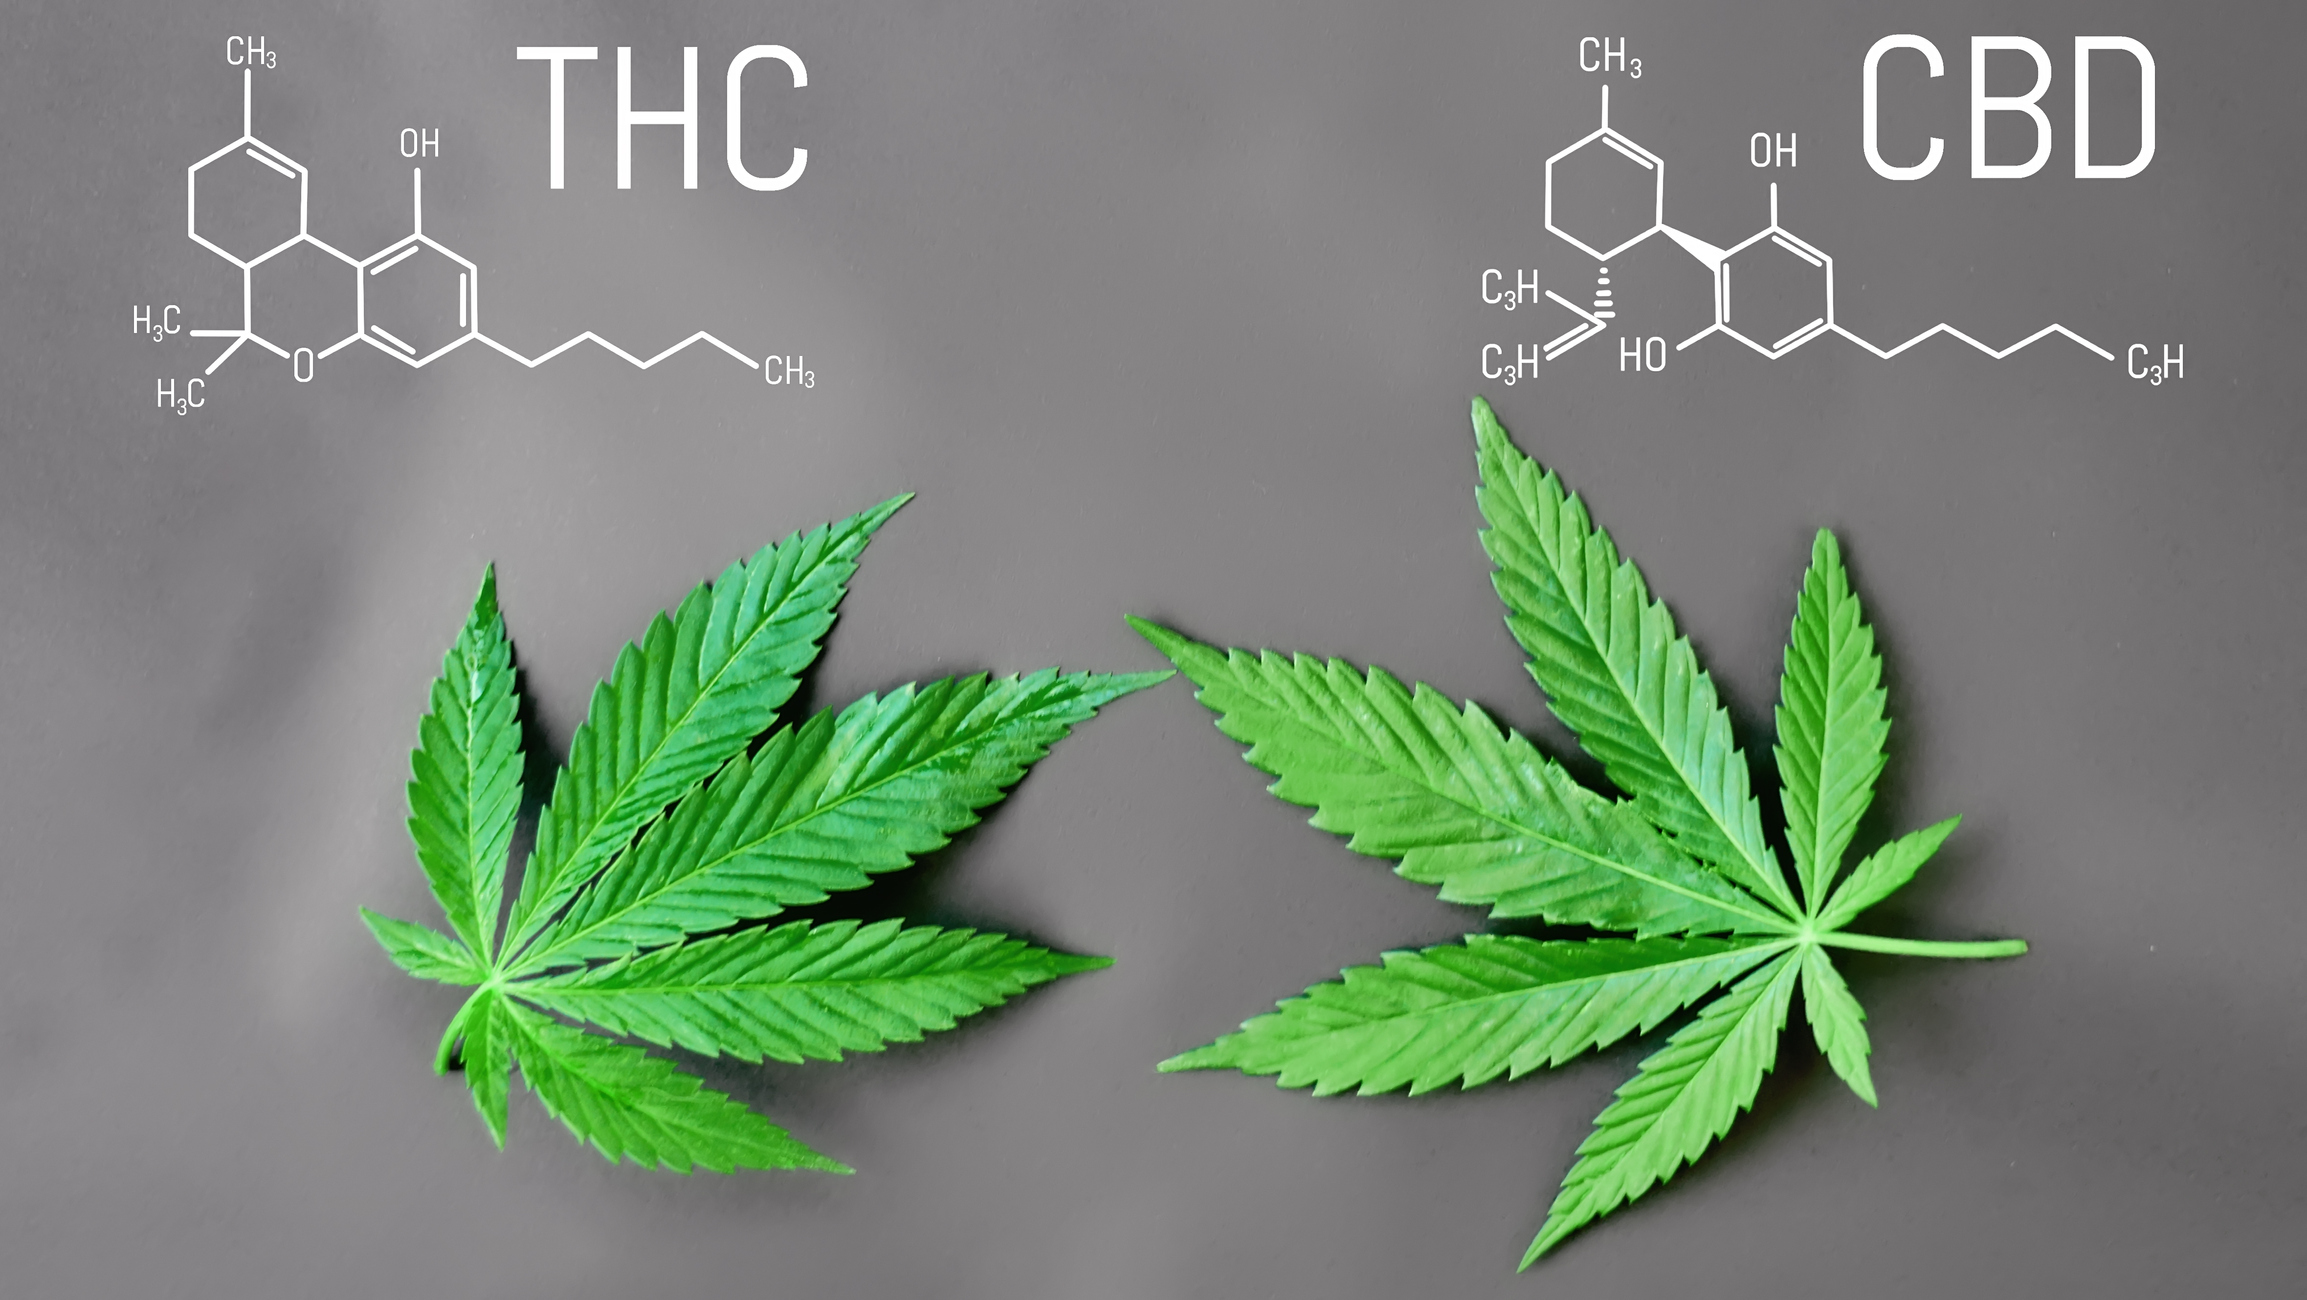 CBD vs THC